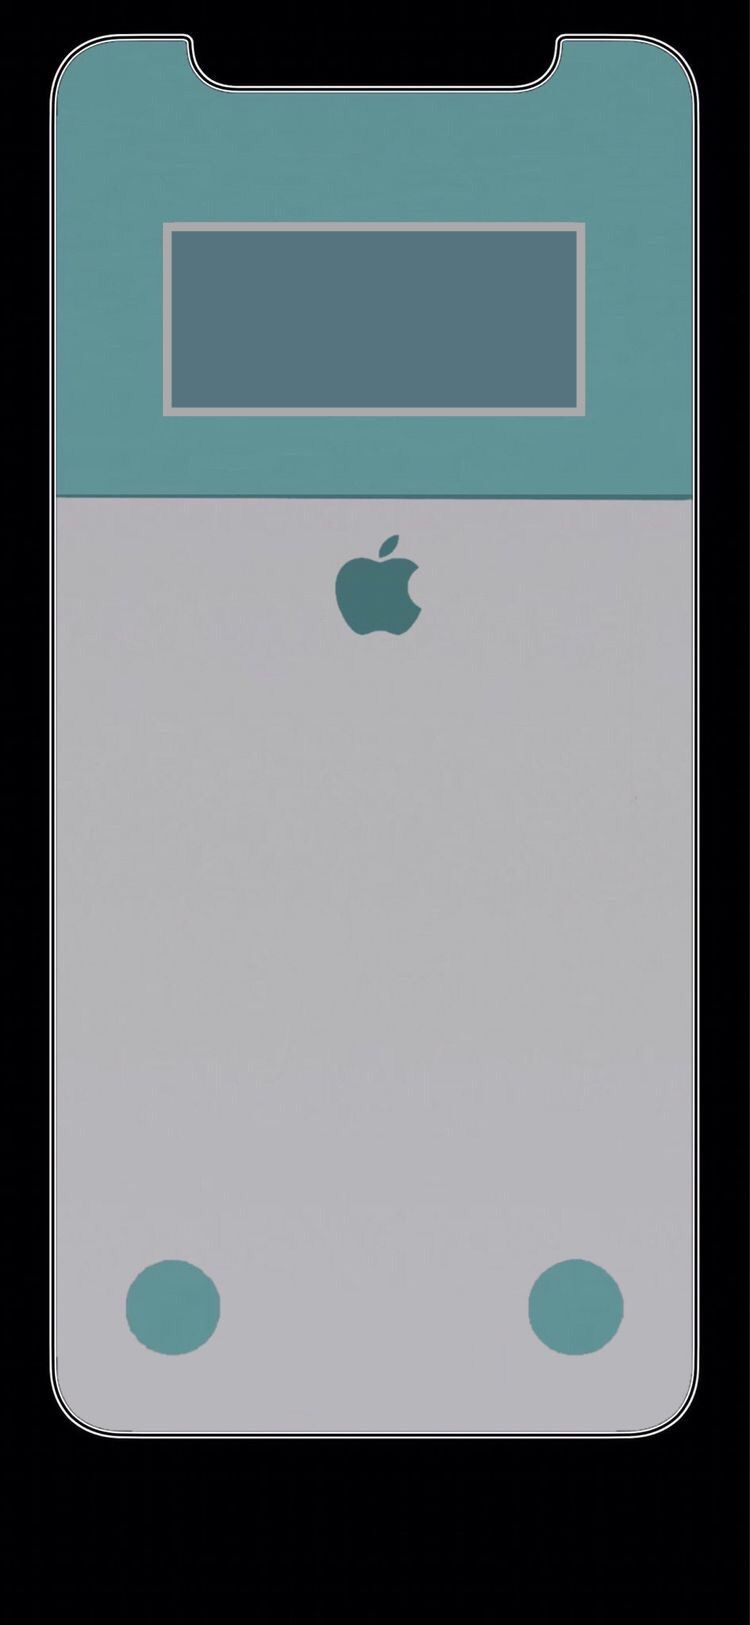 Lock Screen iPhone X. Apple iphone wallpaper hd, HD wallpaper iphone, iPhone homescreen wallpaper